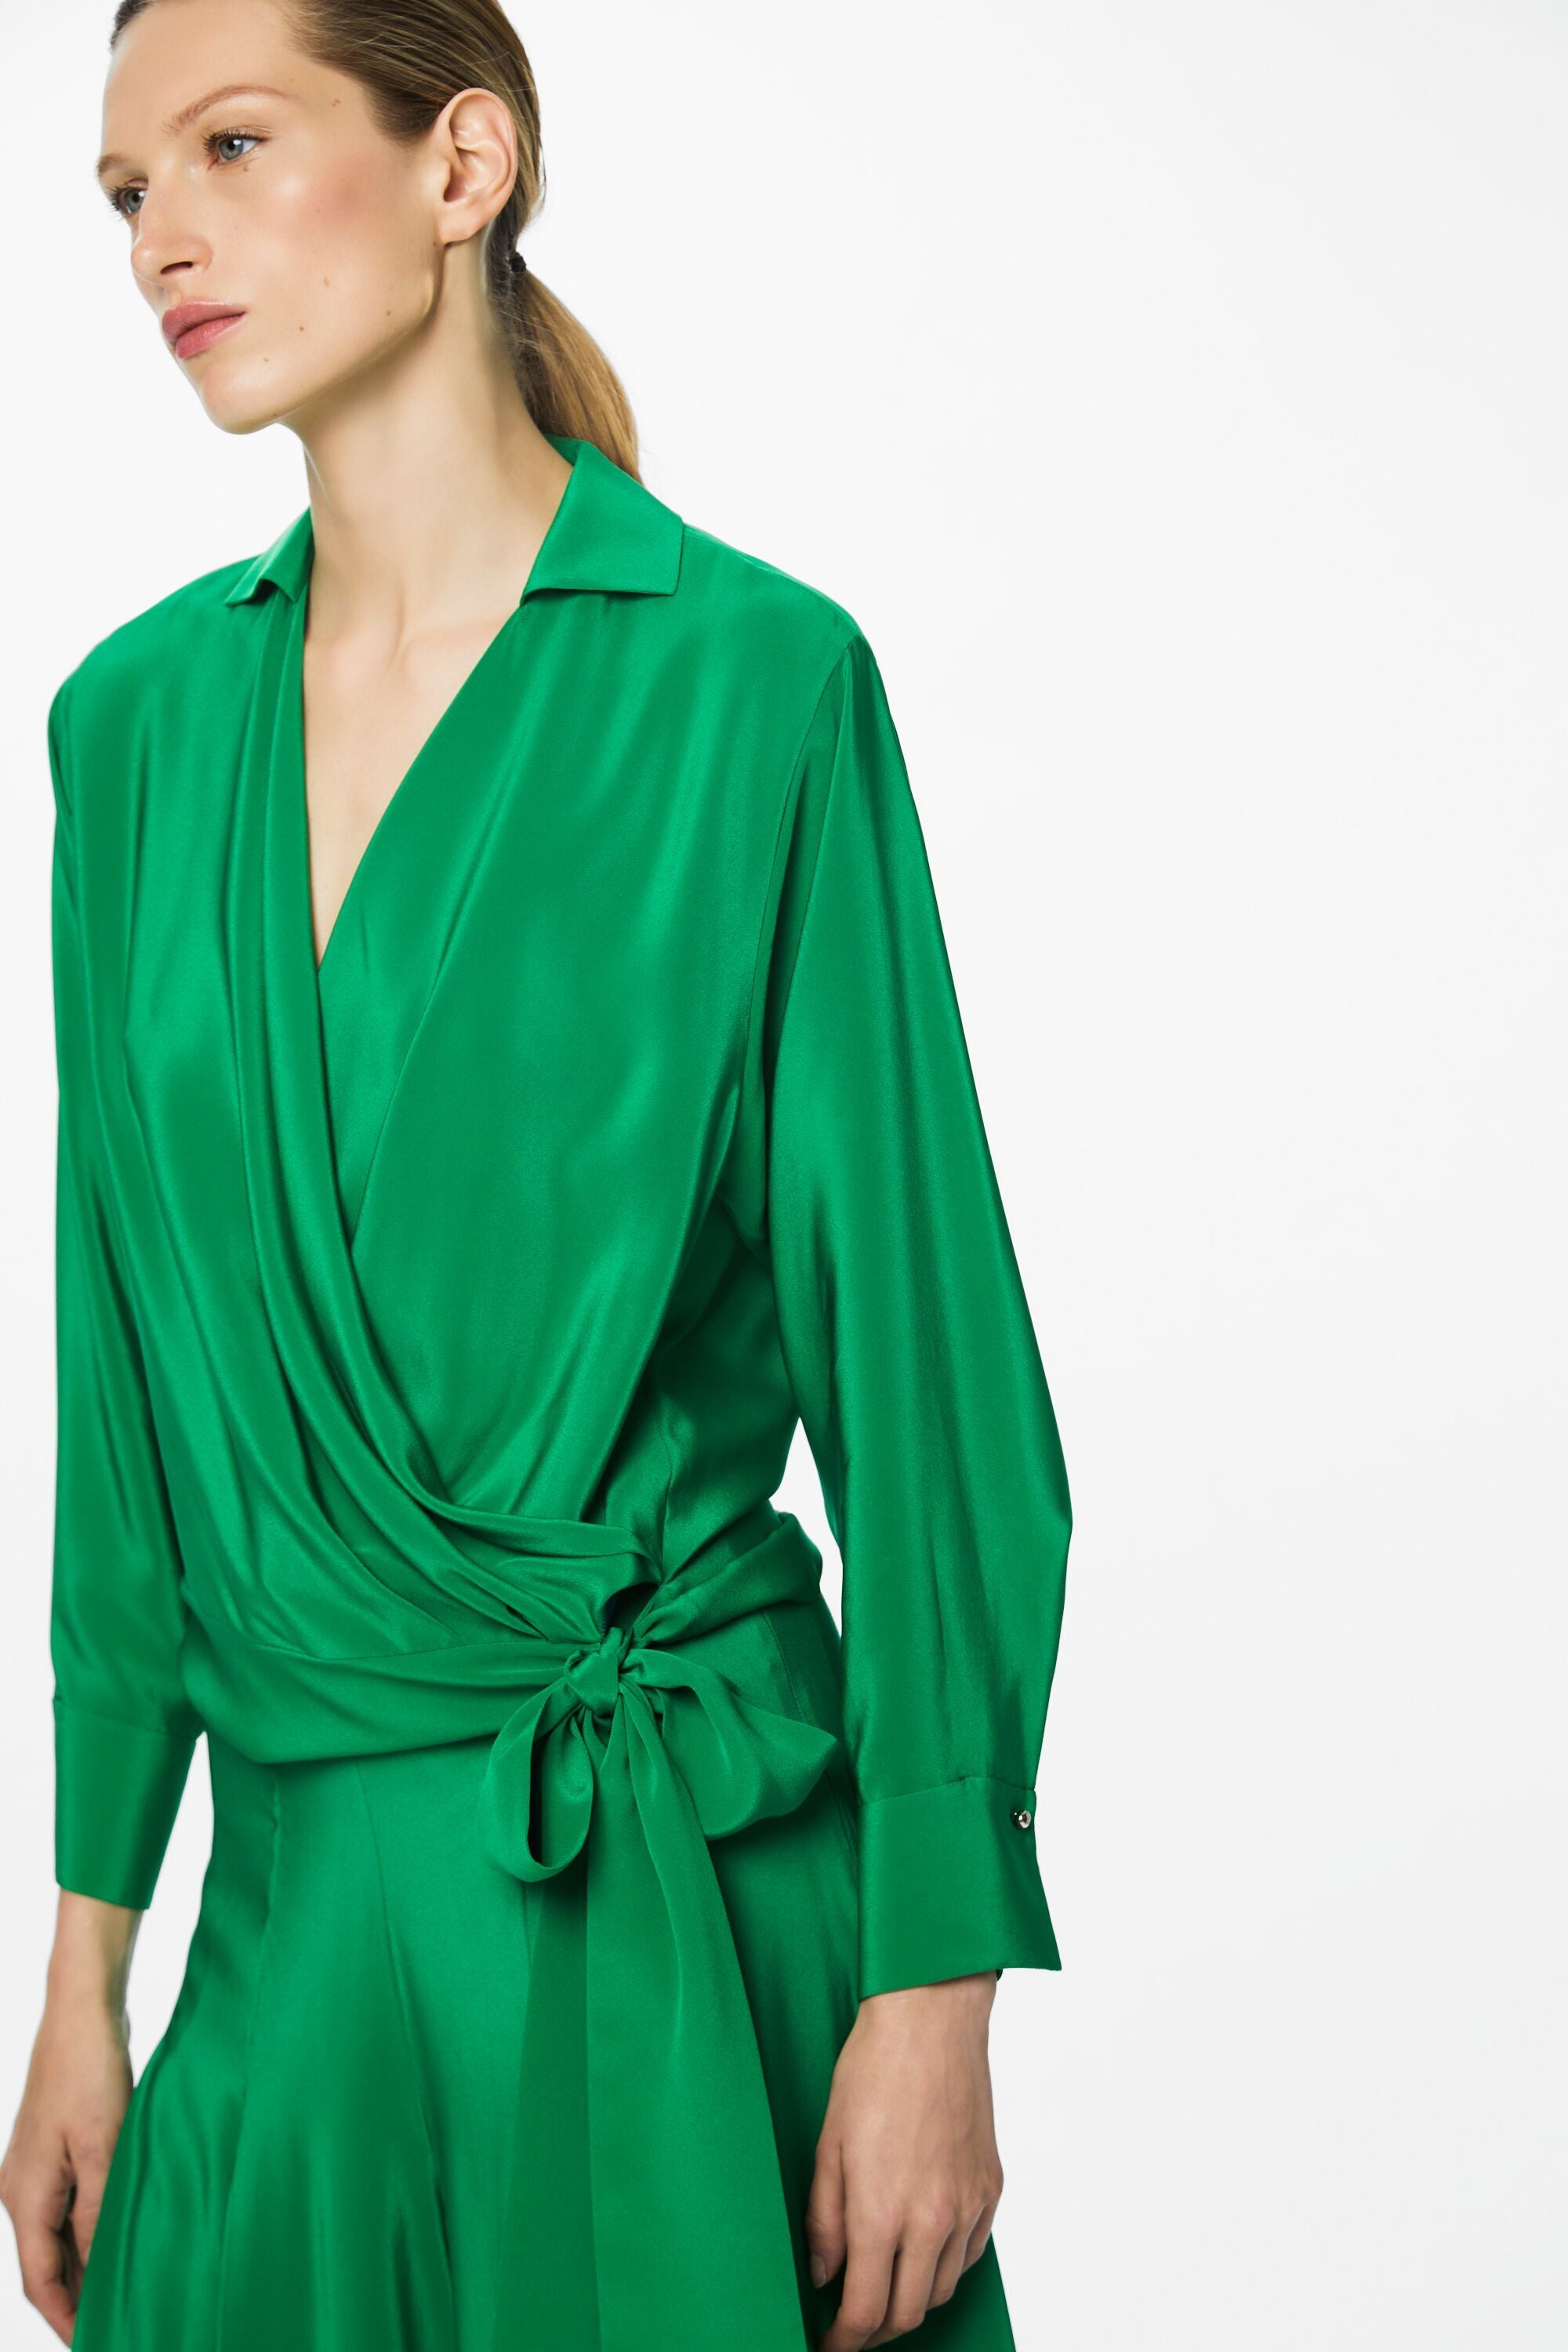 Cachecoeur crepe chine shirt with bow green - CH Carolina Herrera